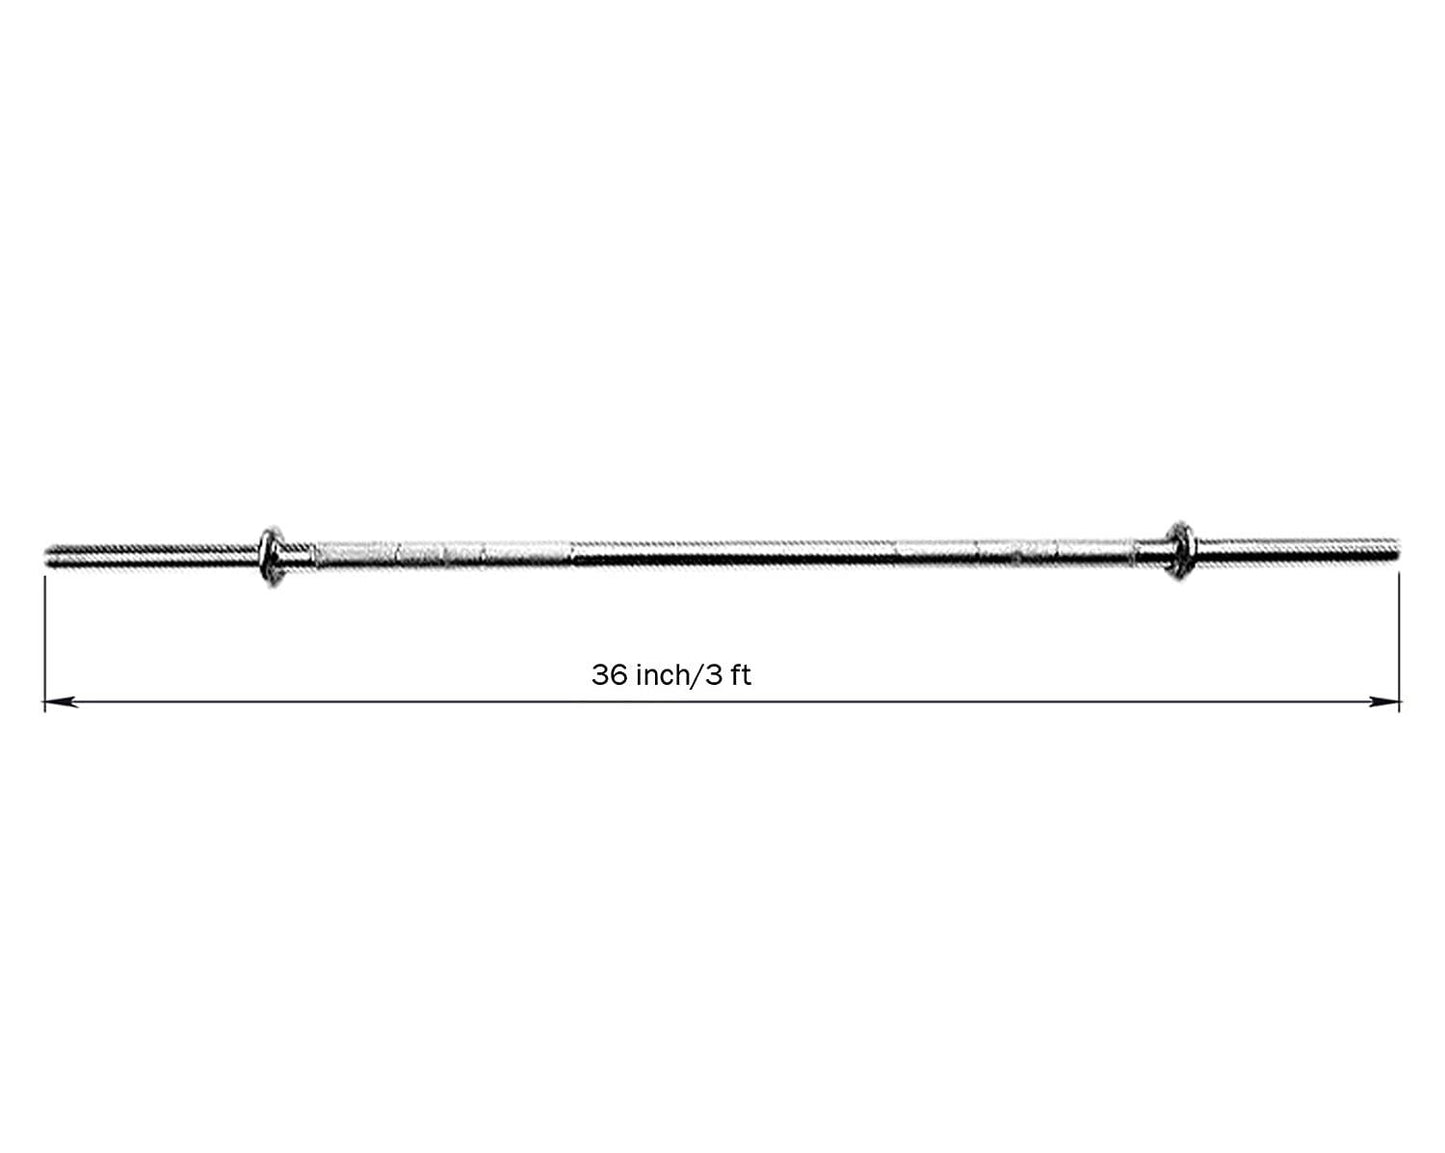 Prokick 3 ft (36 inch) Straight Bar Bell Rod - Best Price online Prokicksports.com